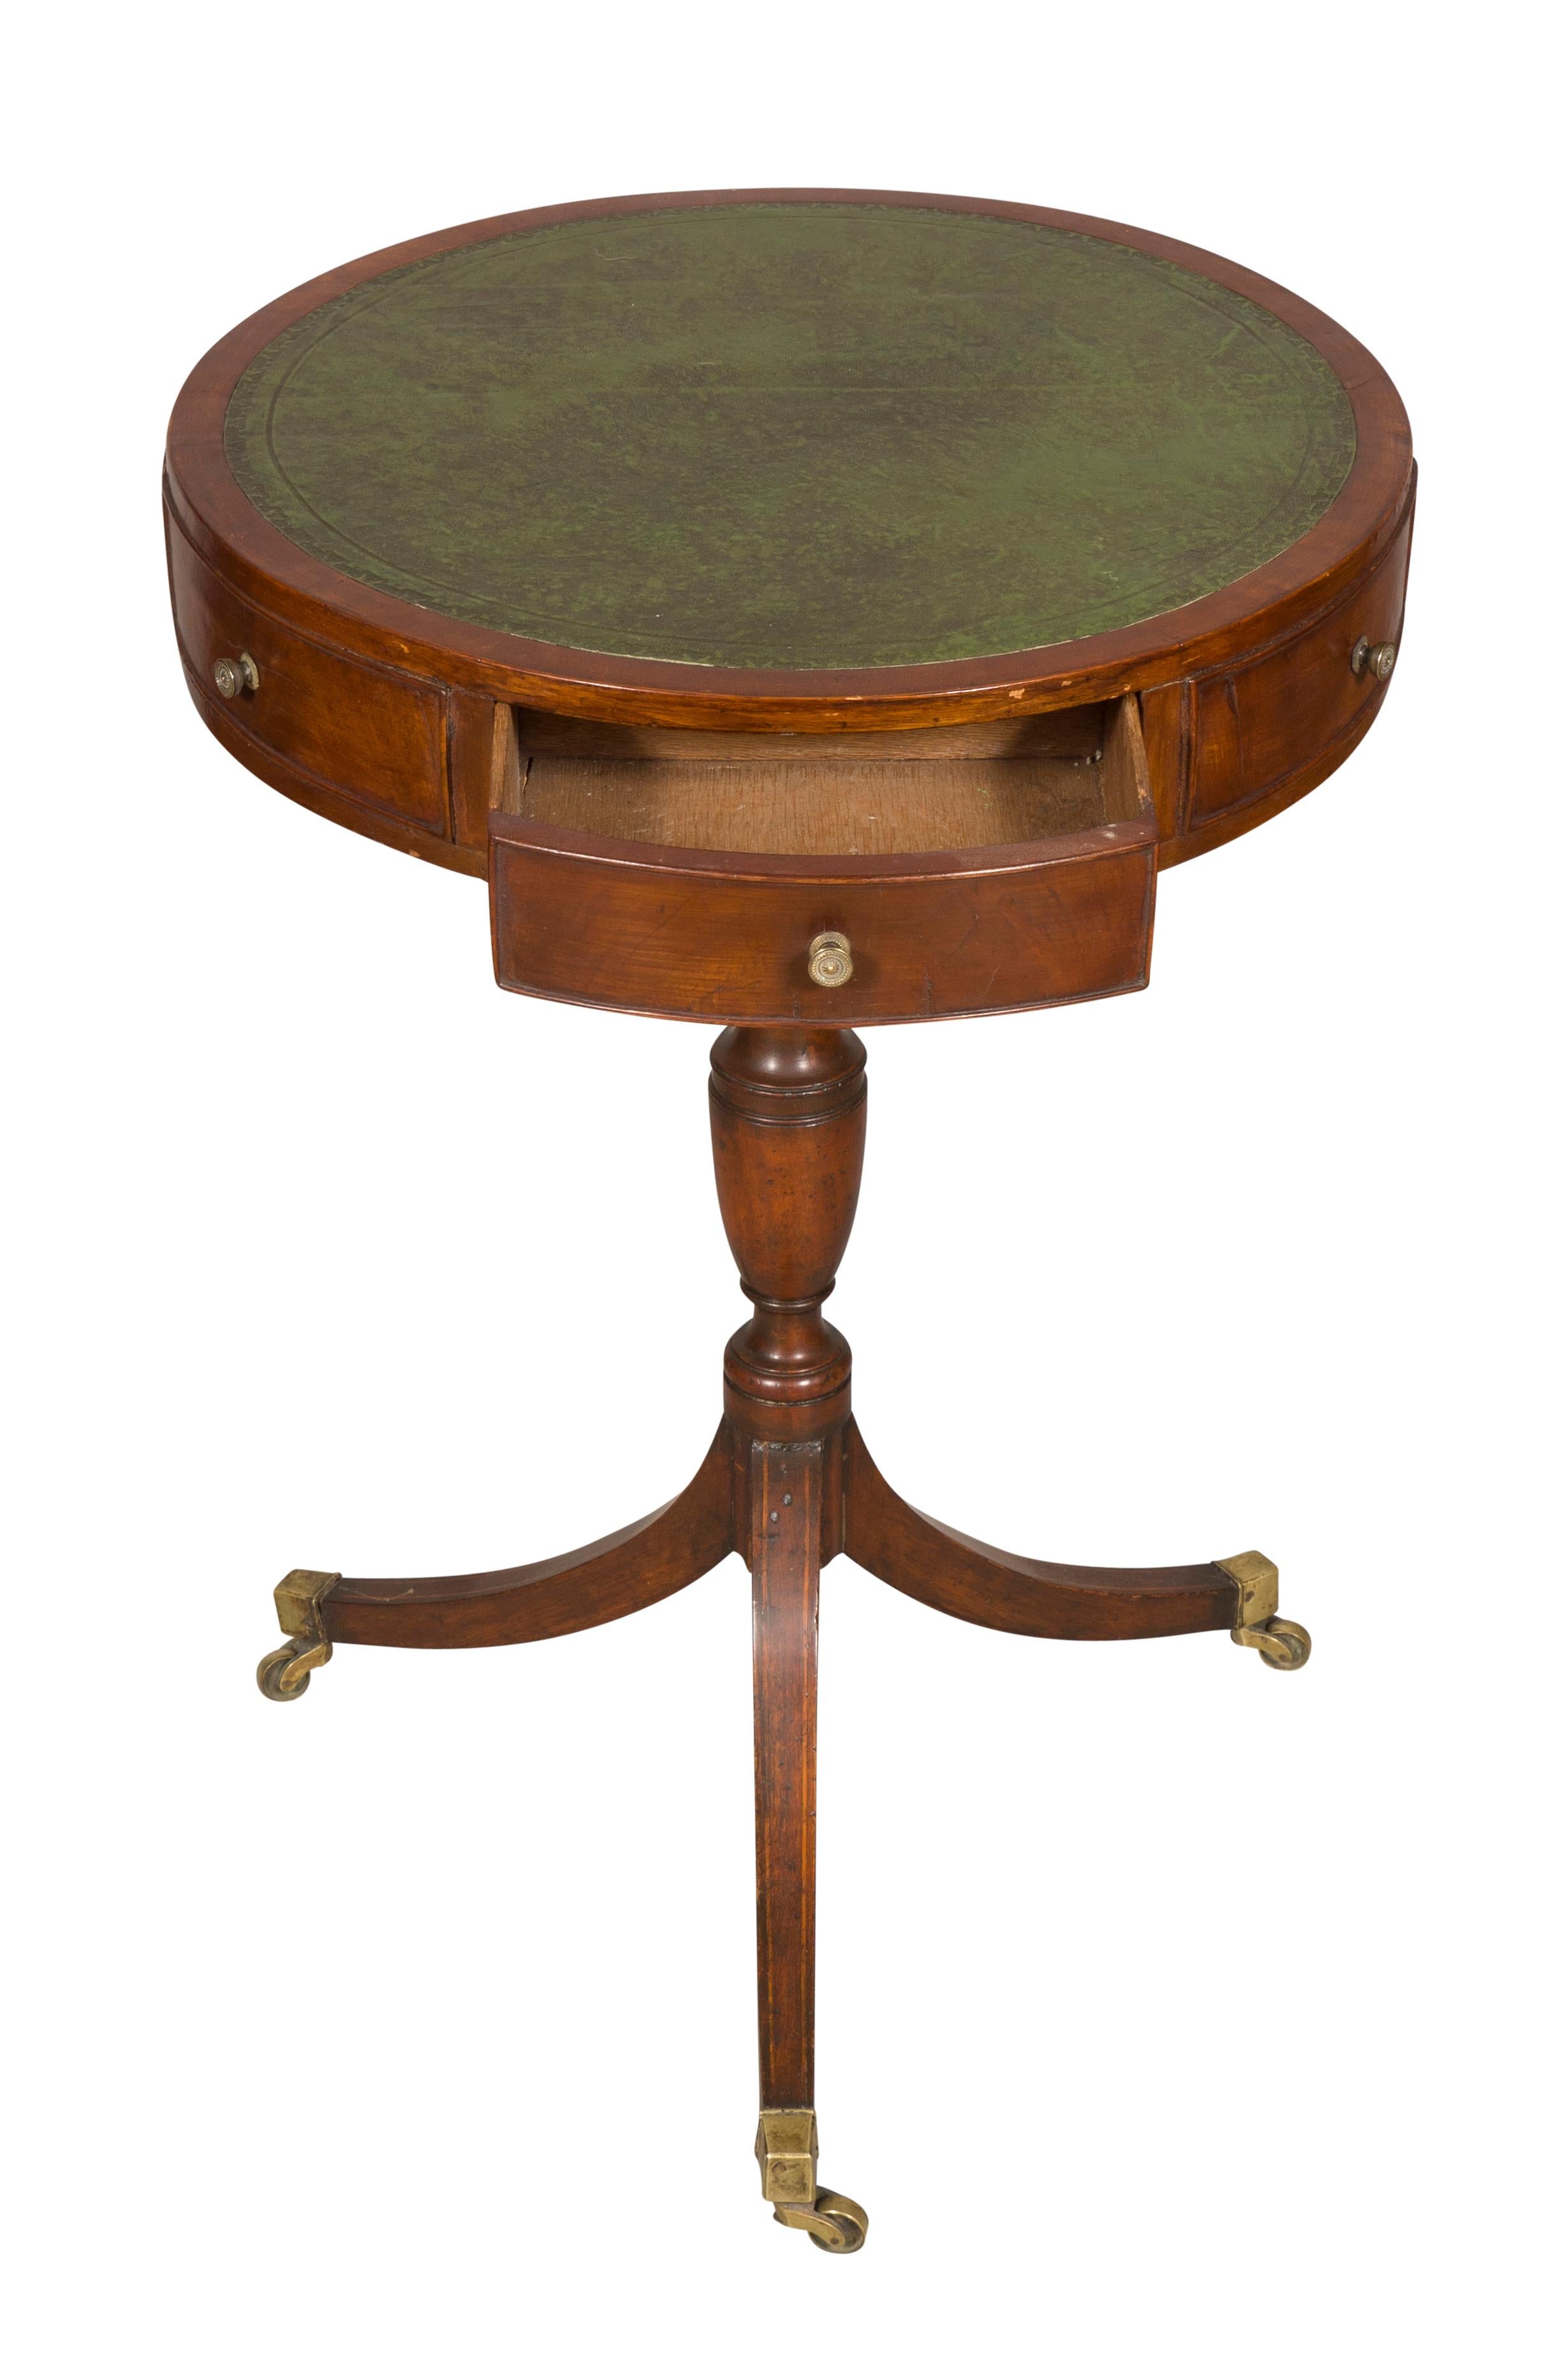 Regency Revival Regency Style Mahogany Small Drum Table